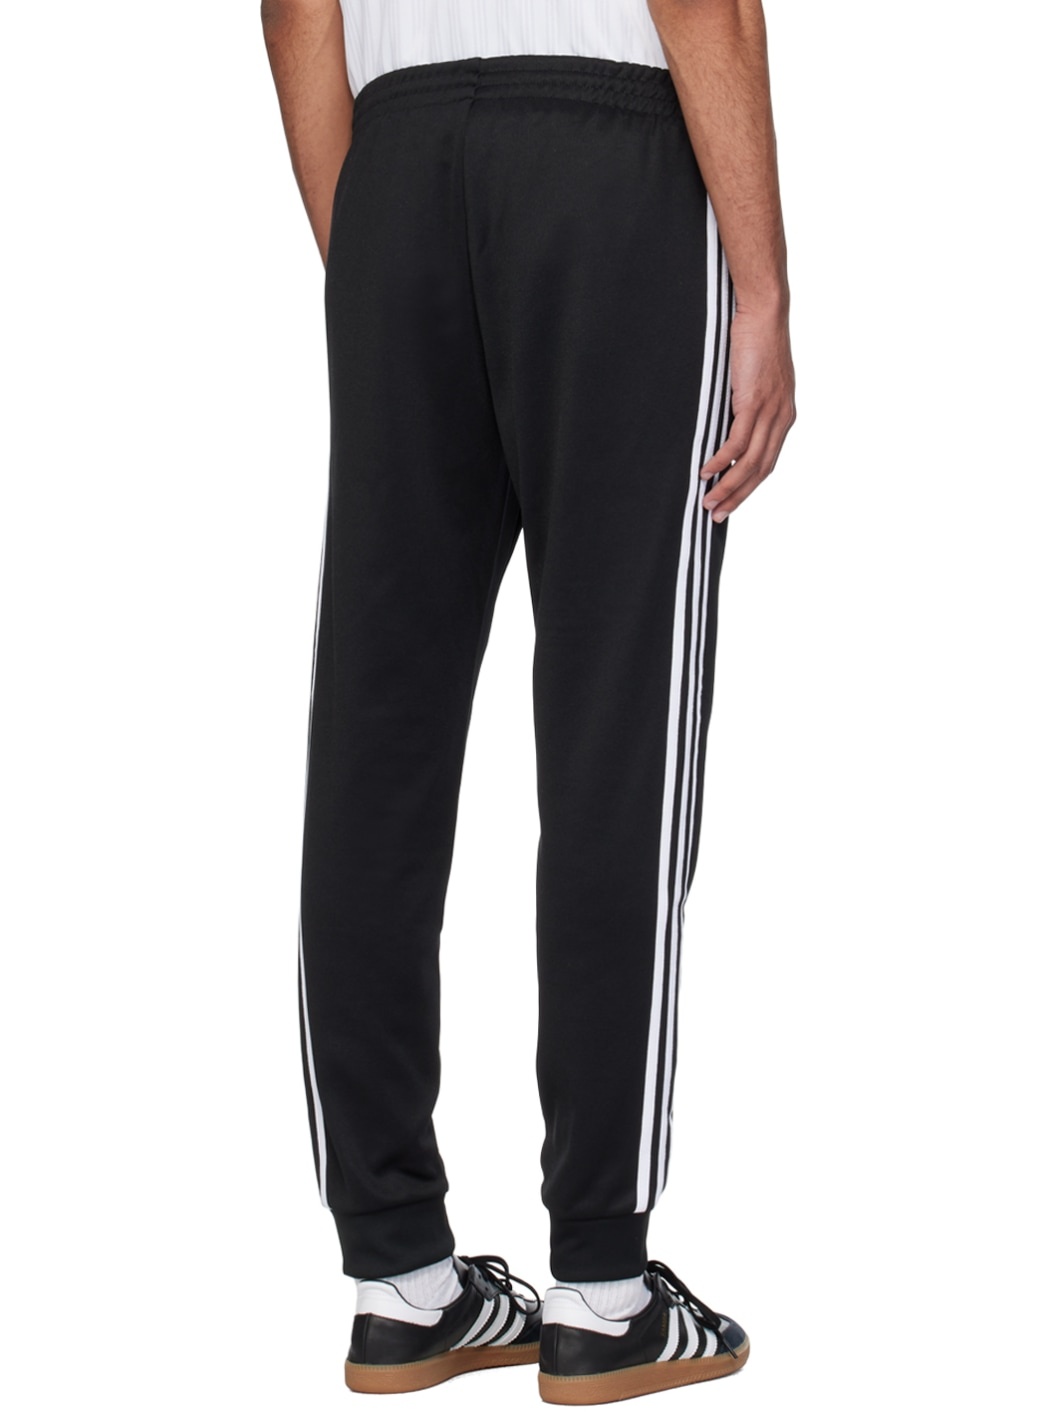 Black 3-Stripe Sweatpants - 3